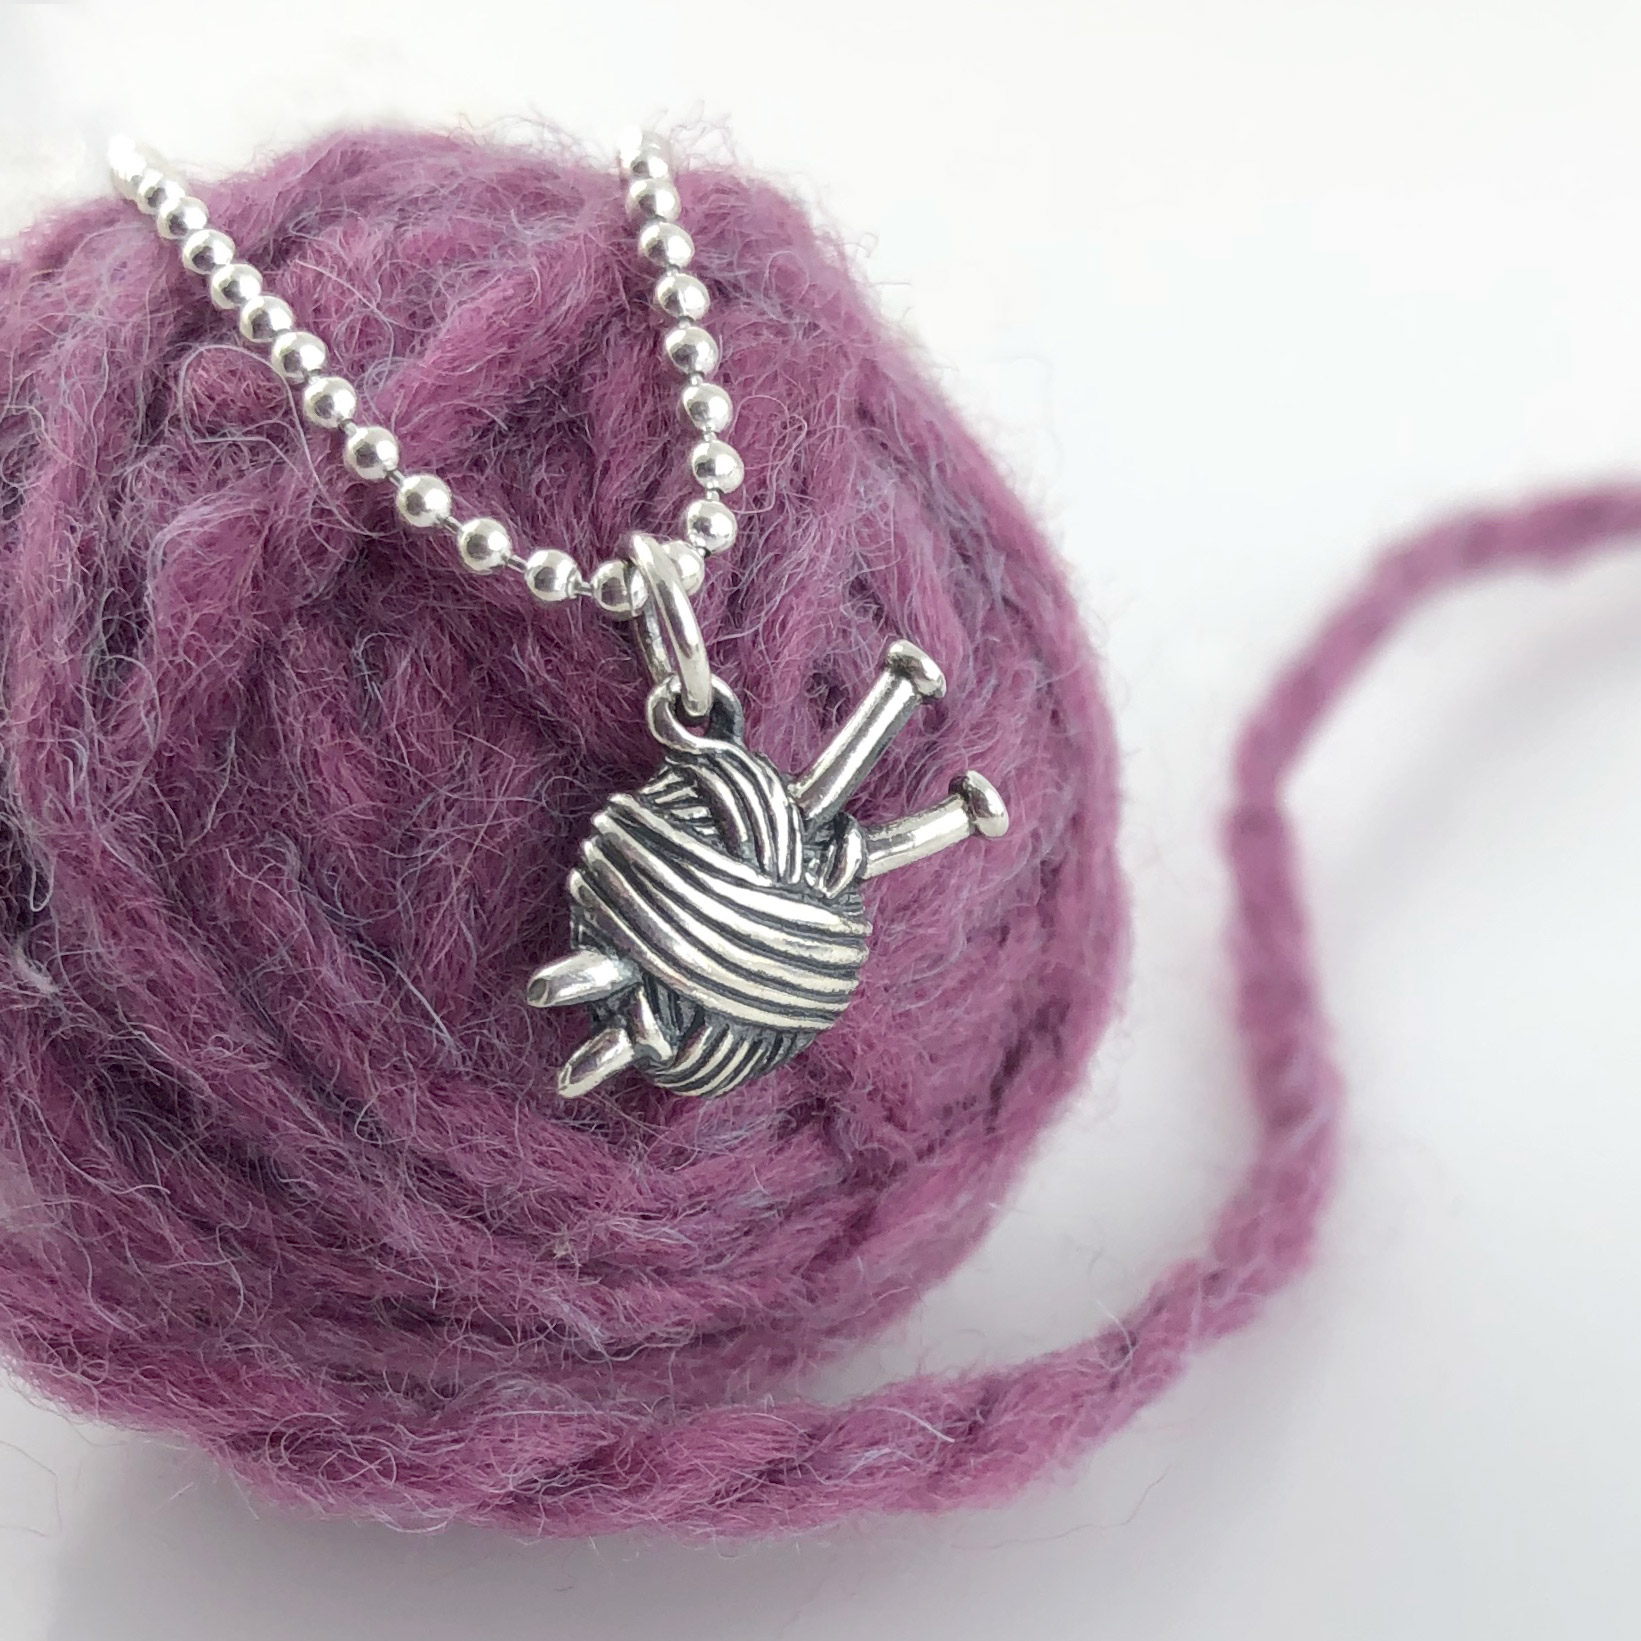 yarn ball necklace